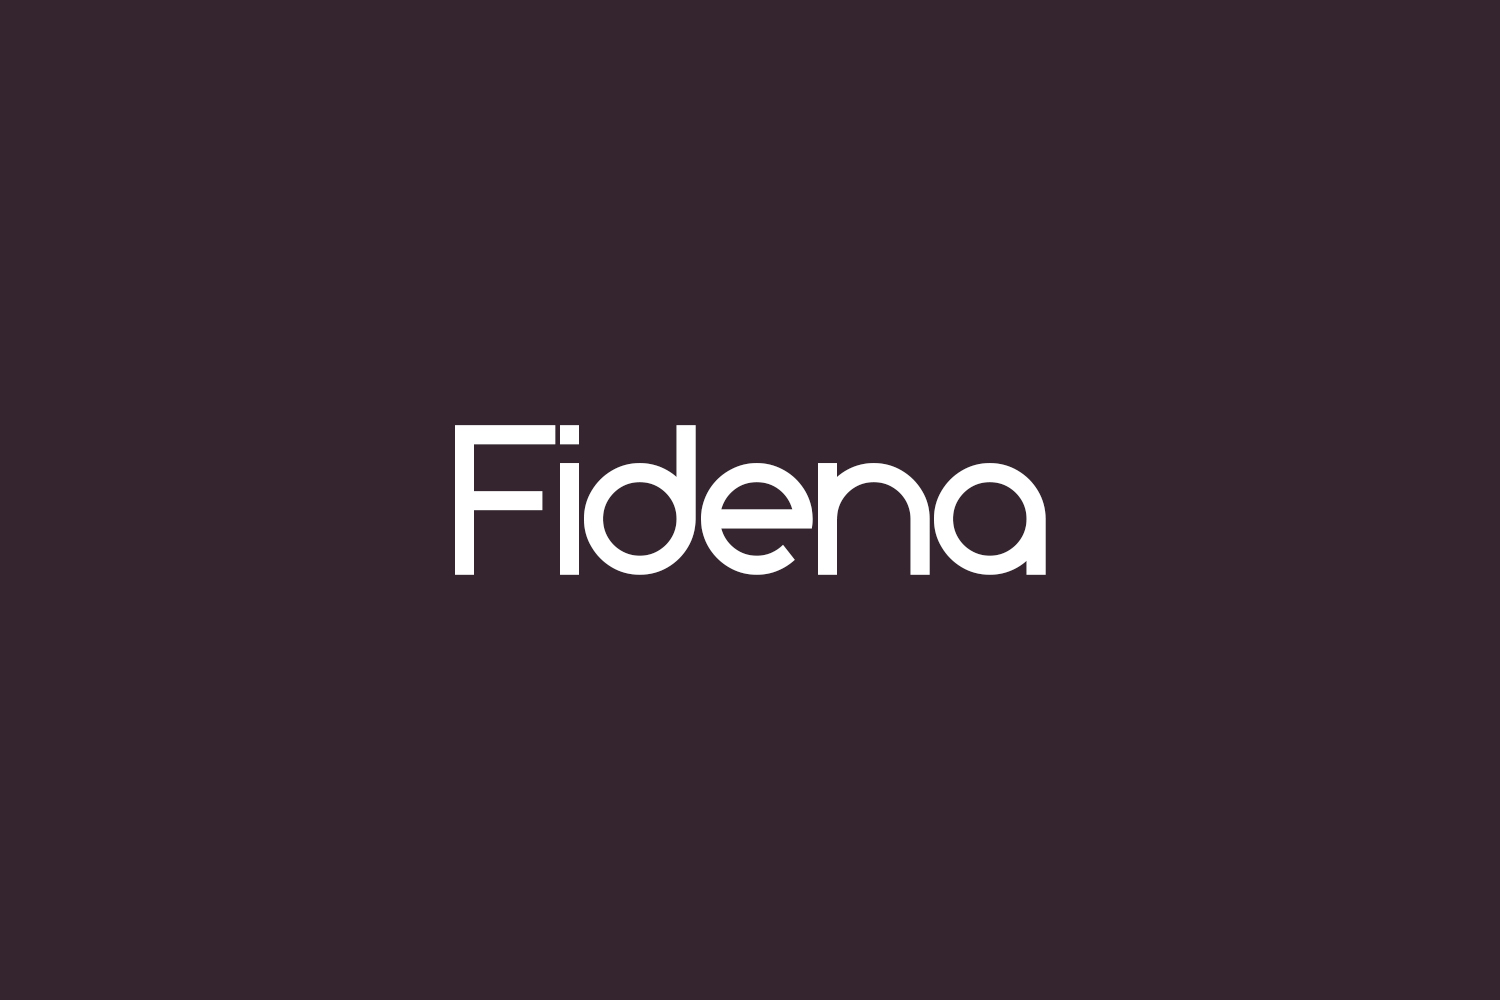 Fidena Free Font